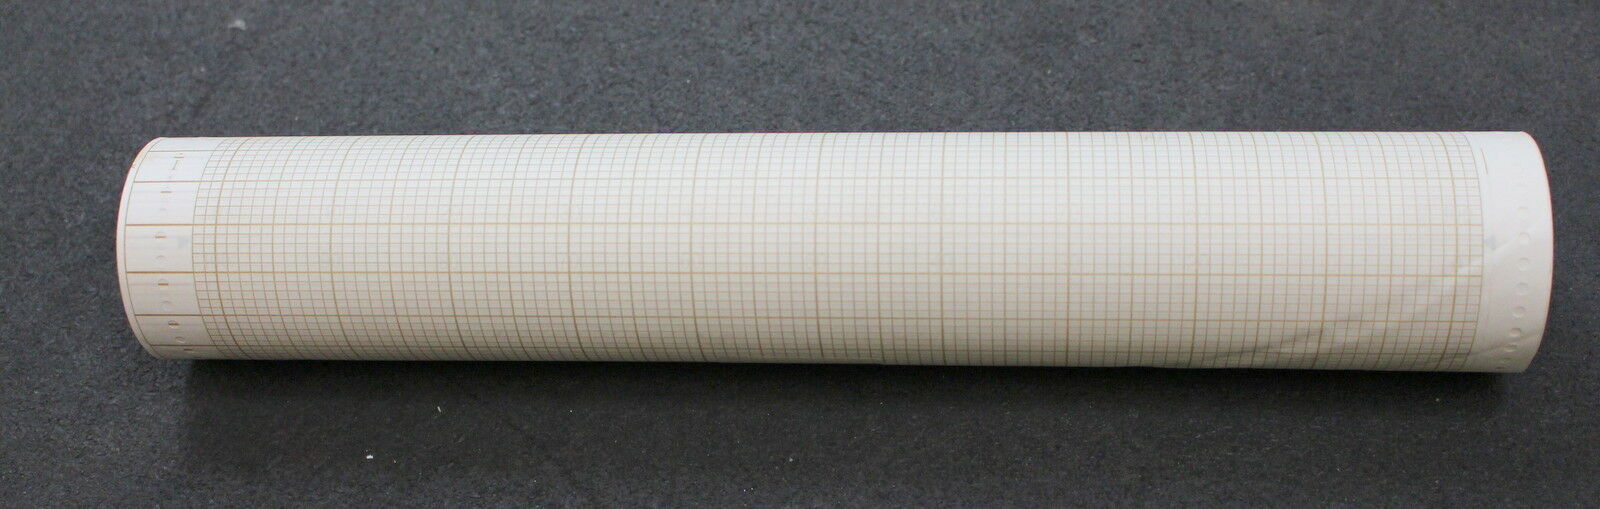 W + W Diagramm-Papierrollen 15-1076 P - Bedruckung 0 - 100 / 100 - 0 - 7 Rollen